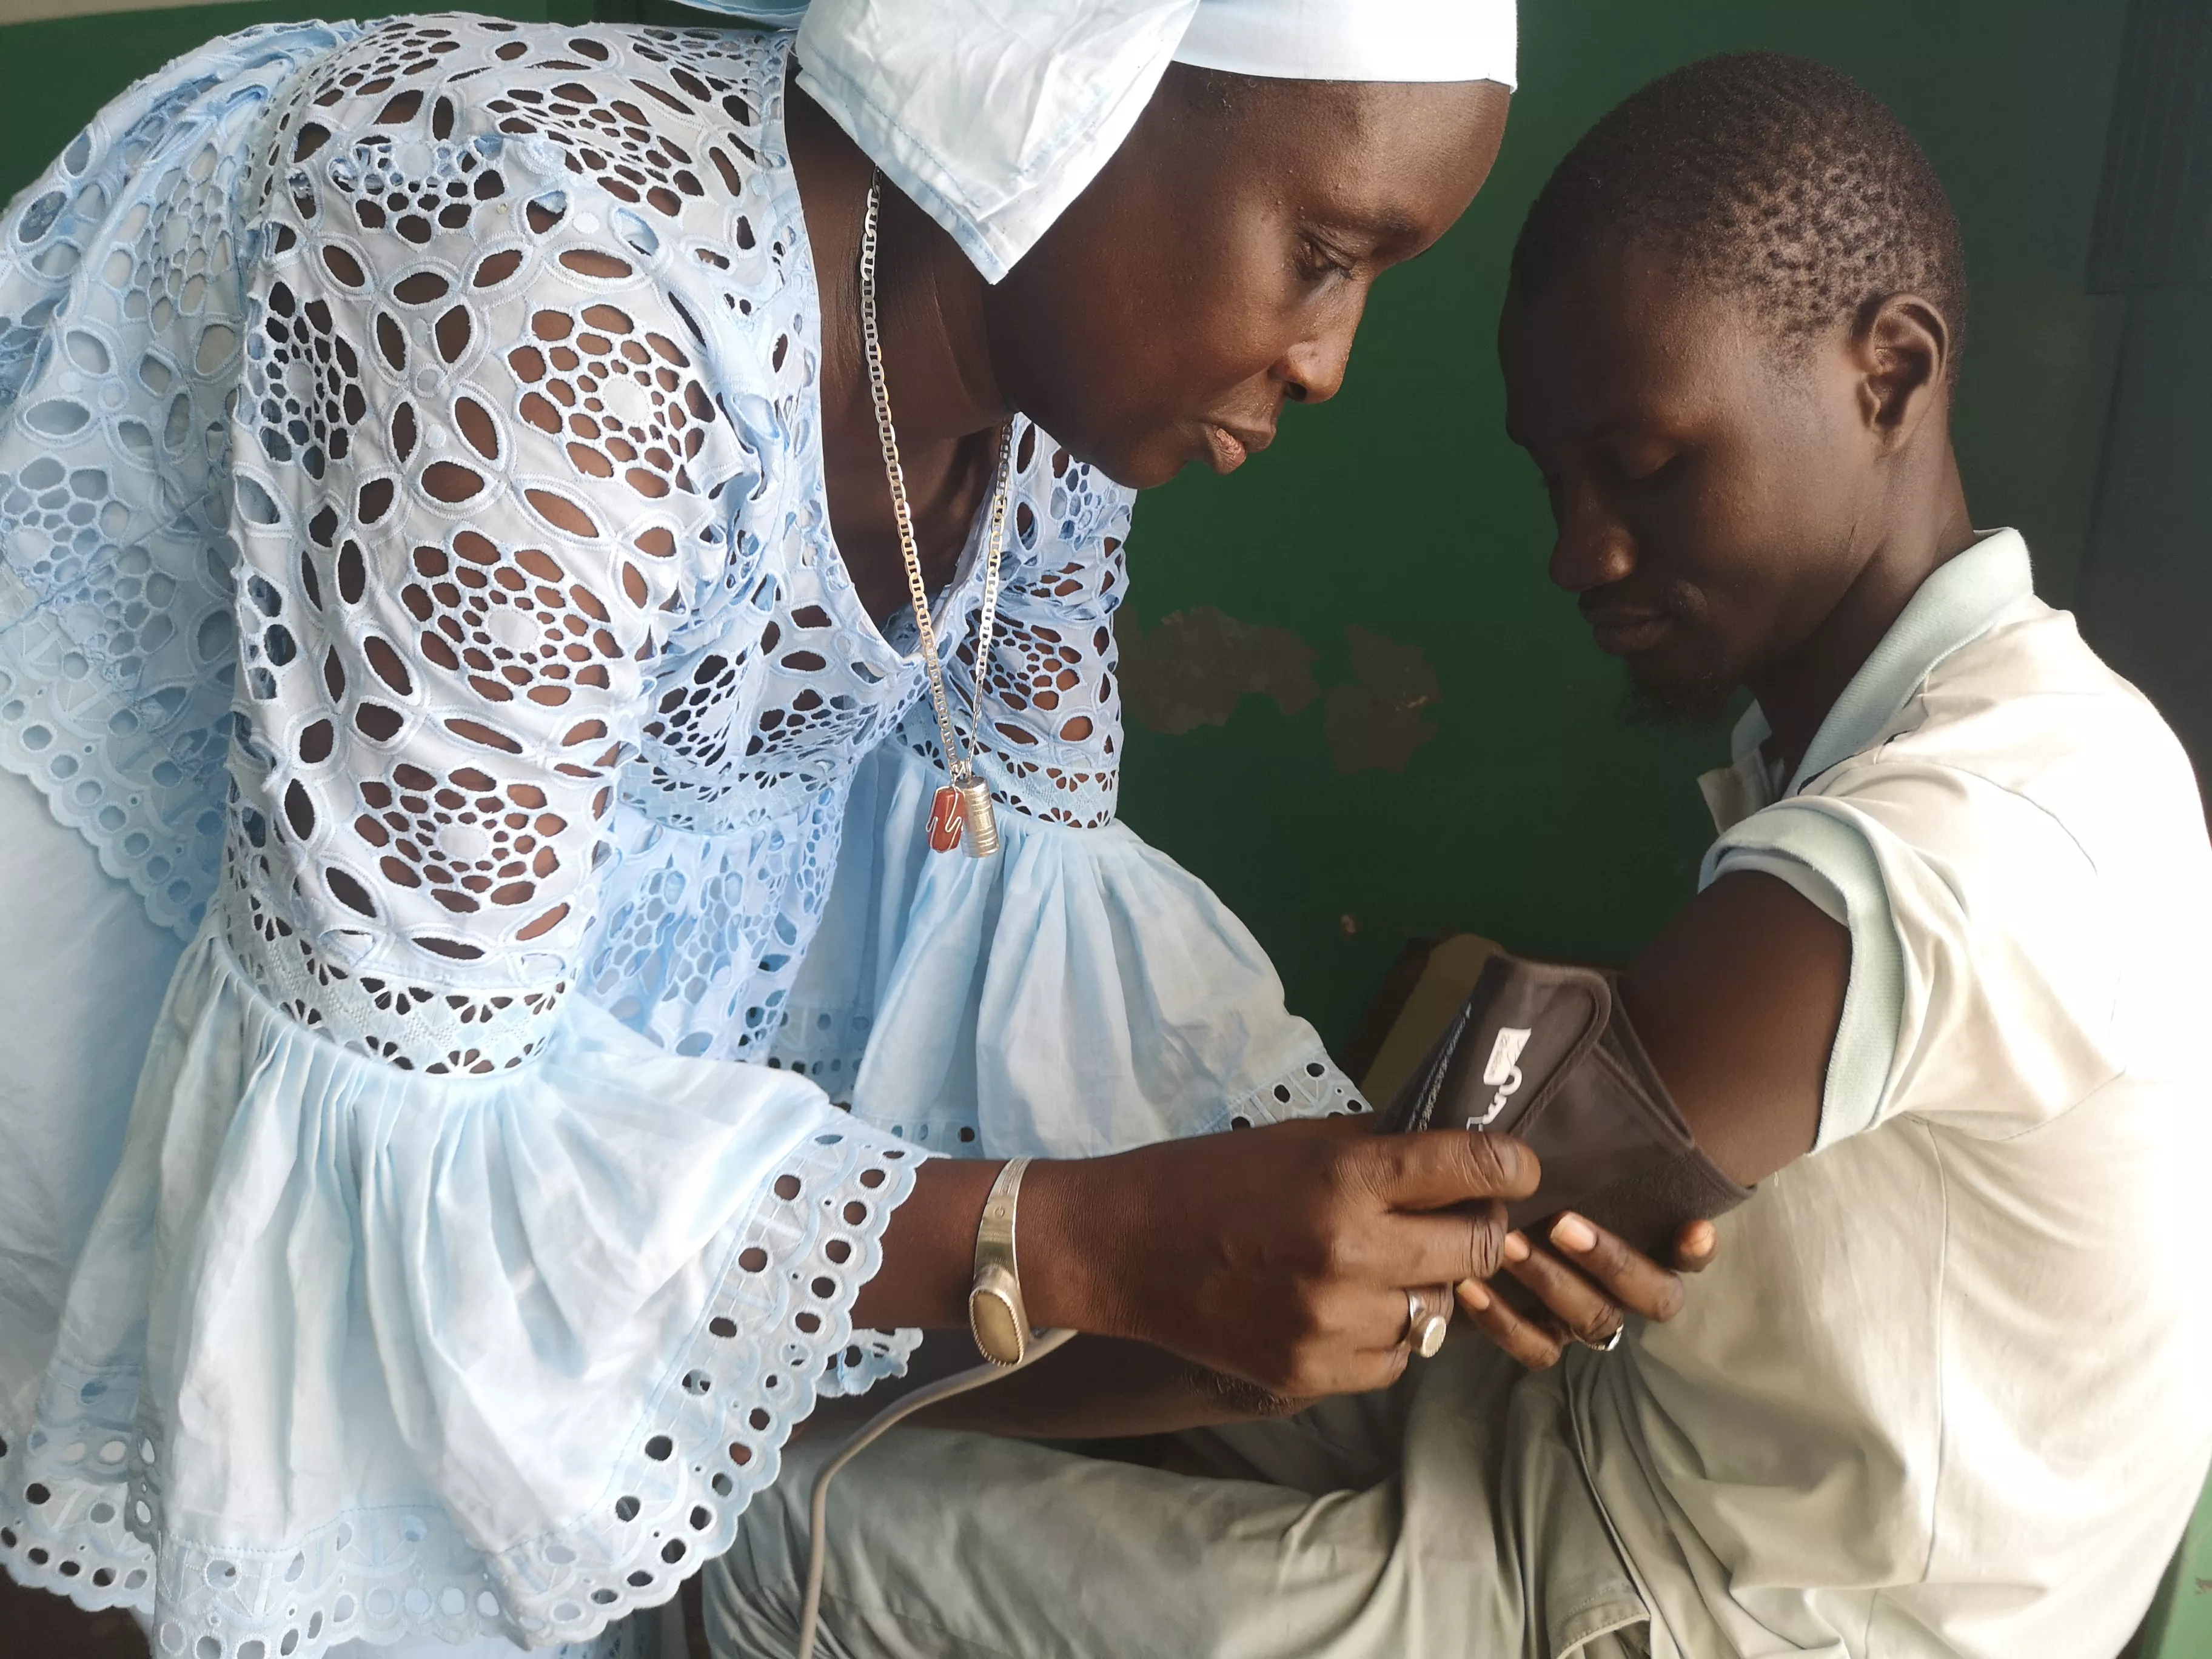 Female community health worker measuring blood pressure of a boy in Dakar